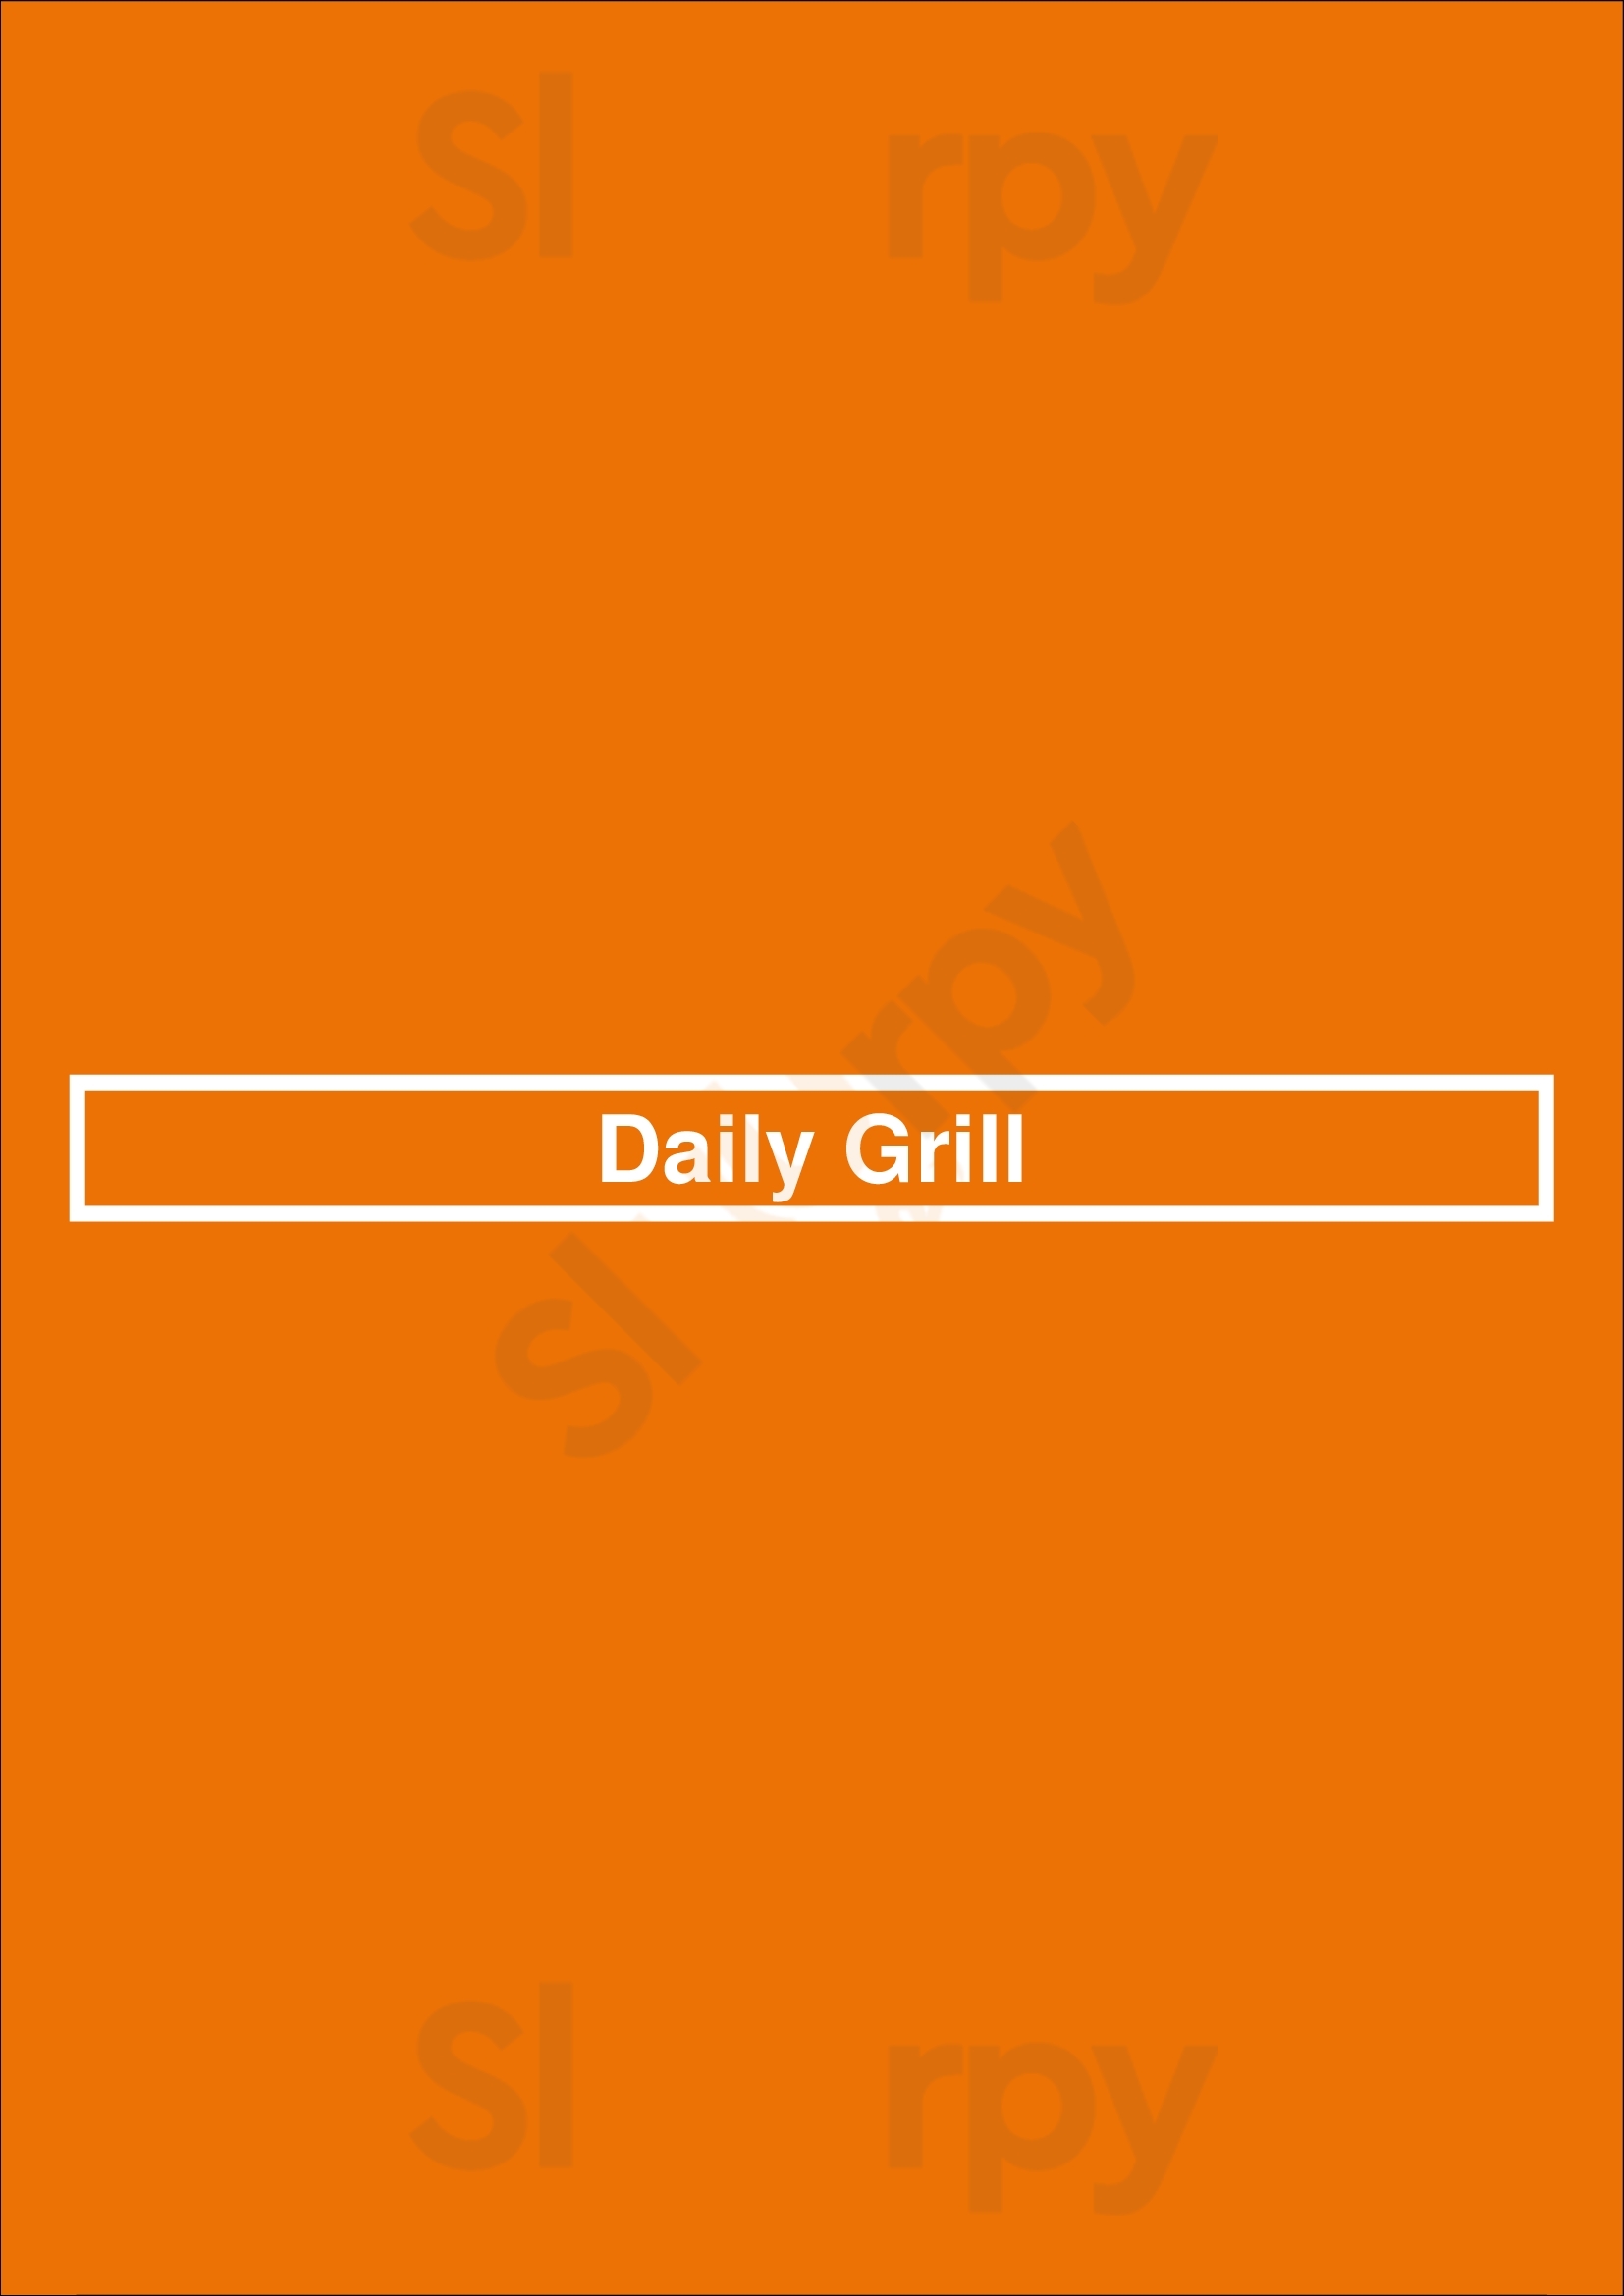 Daily Grill Houston Menu - 1